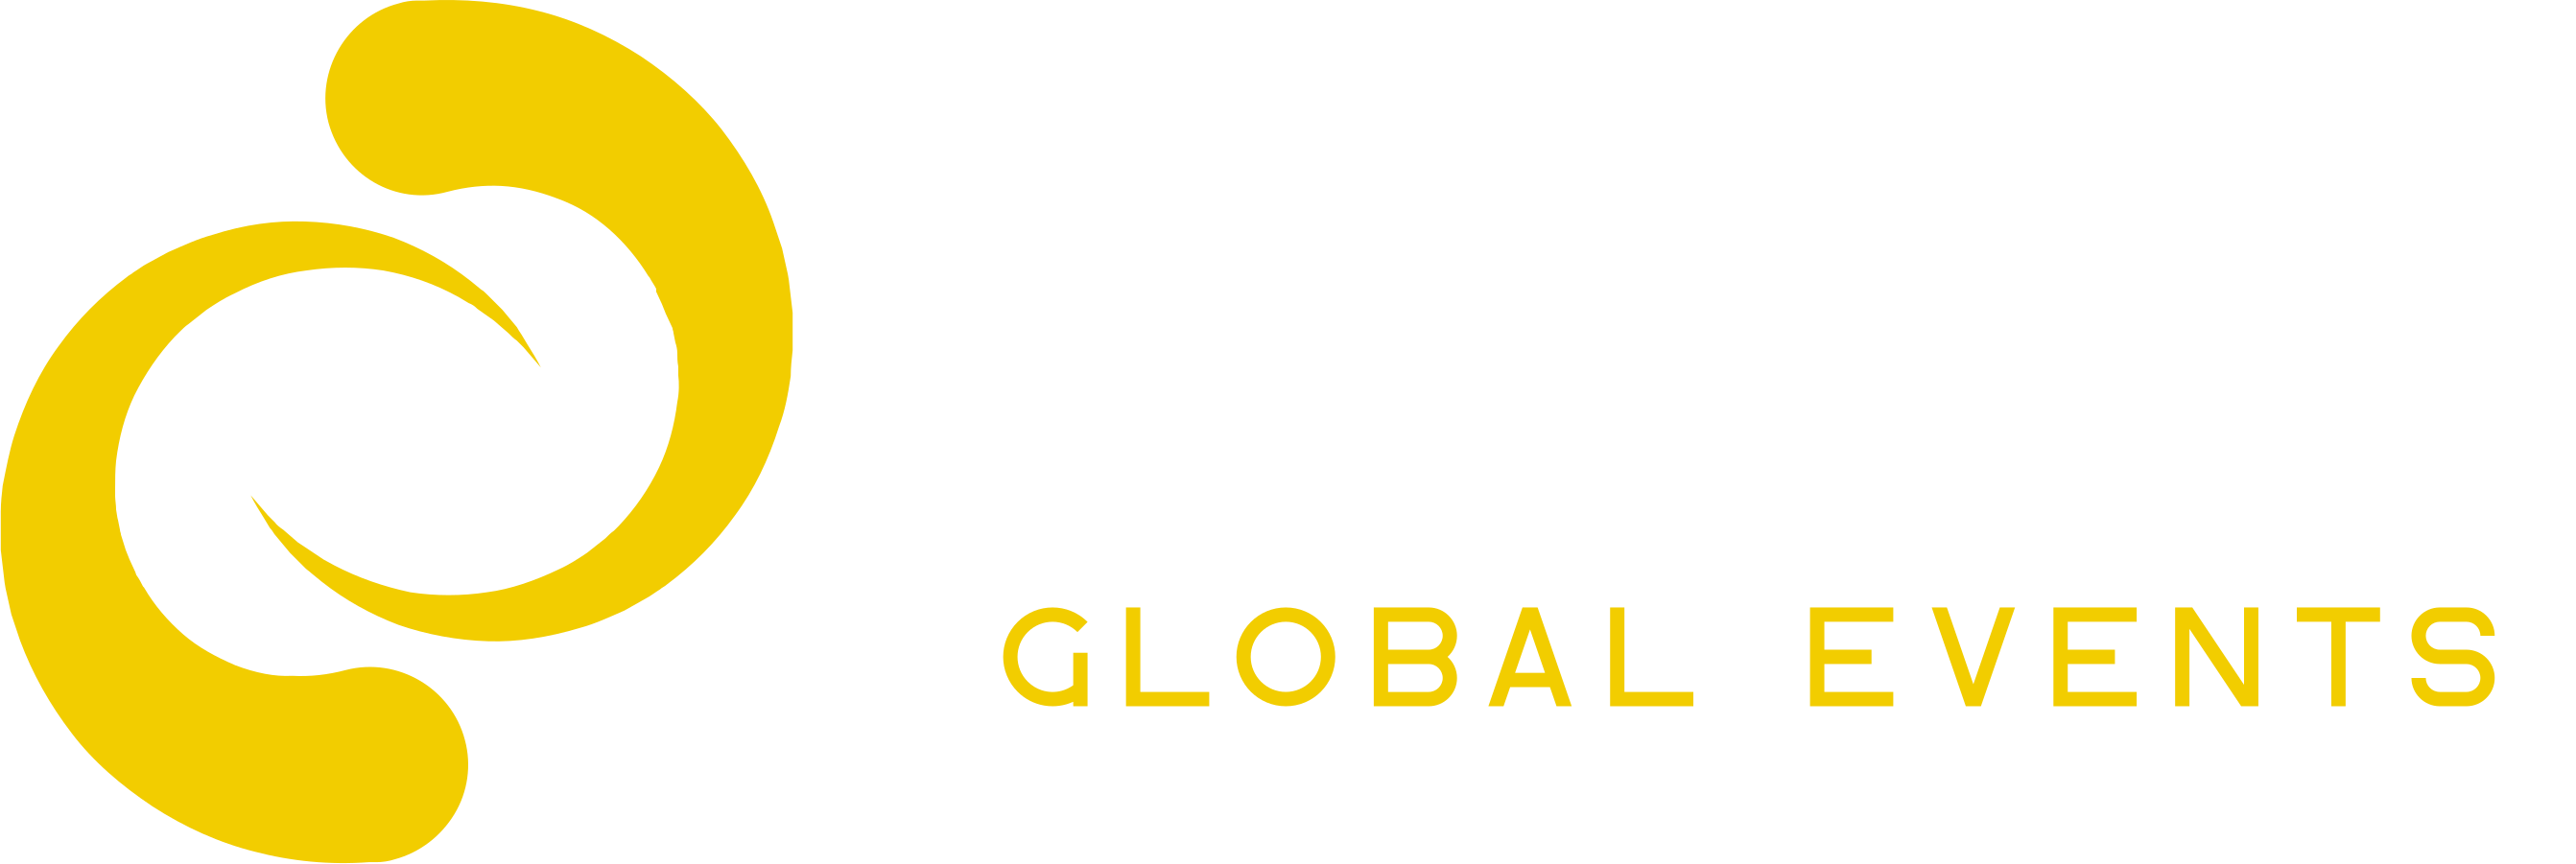 Synergy Global Events